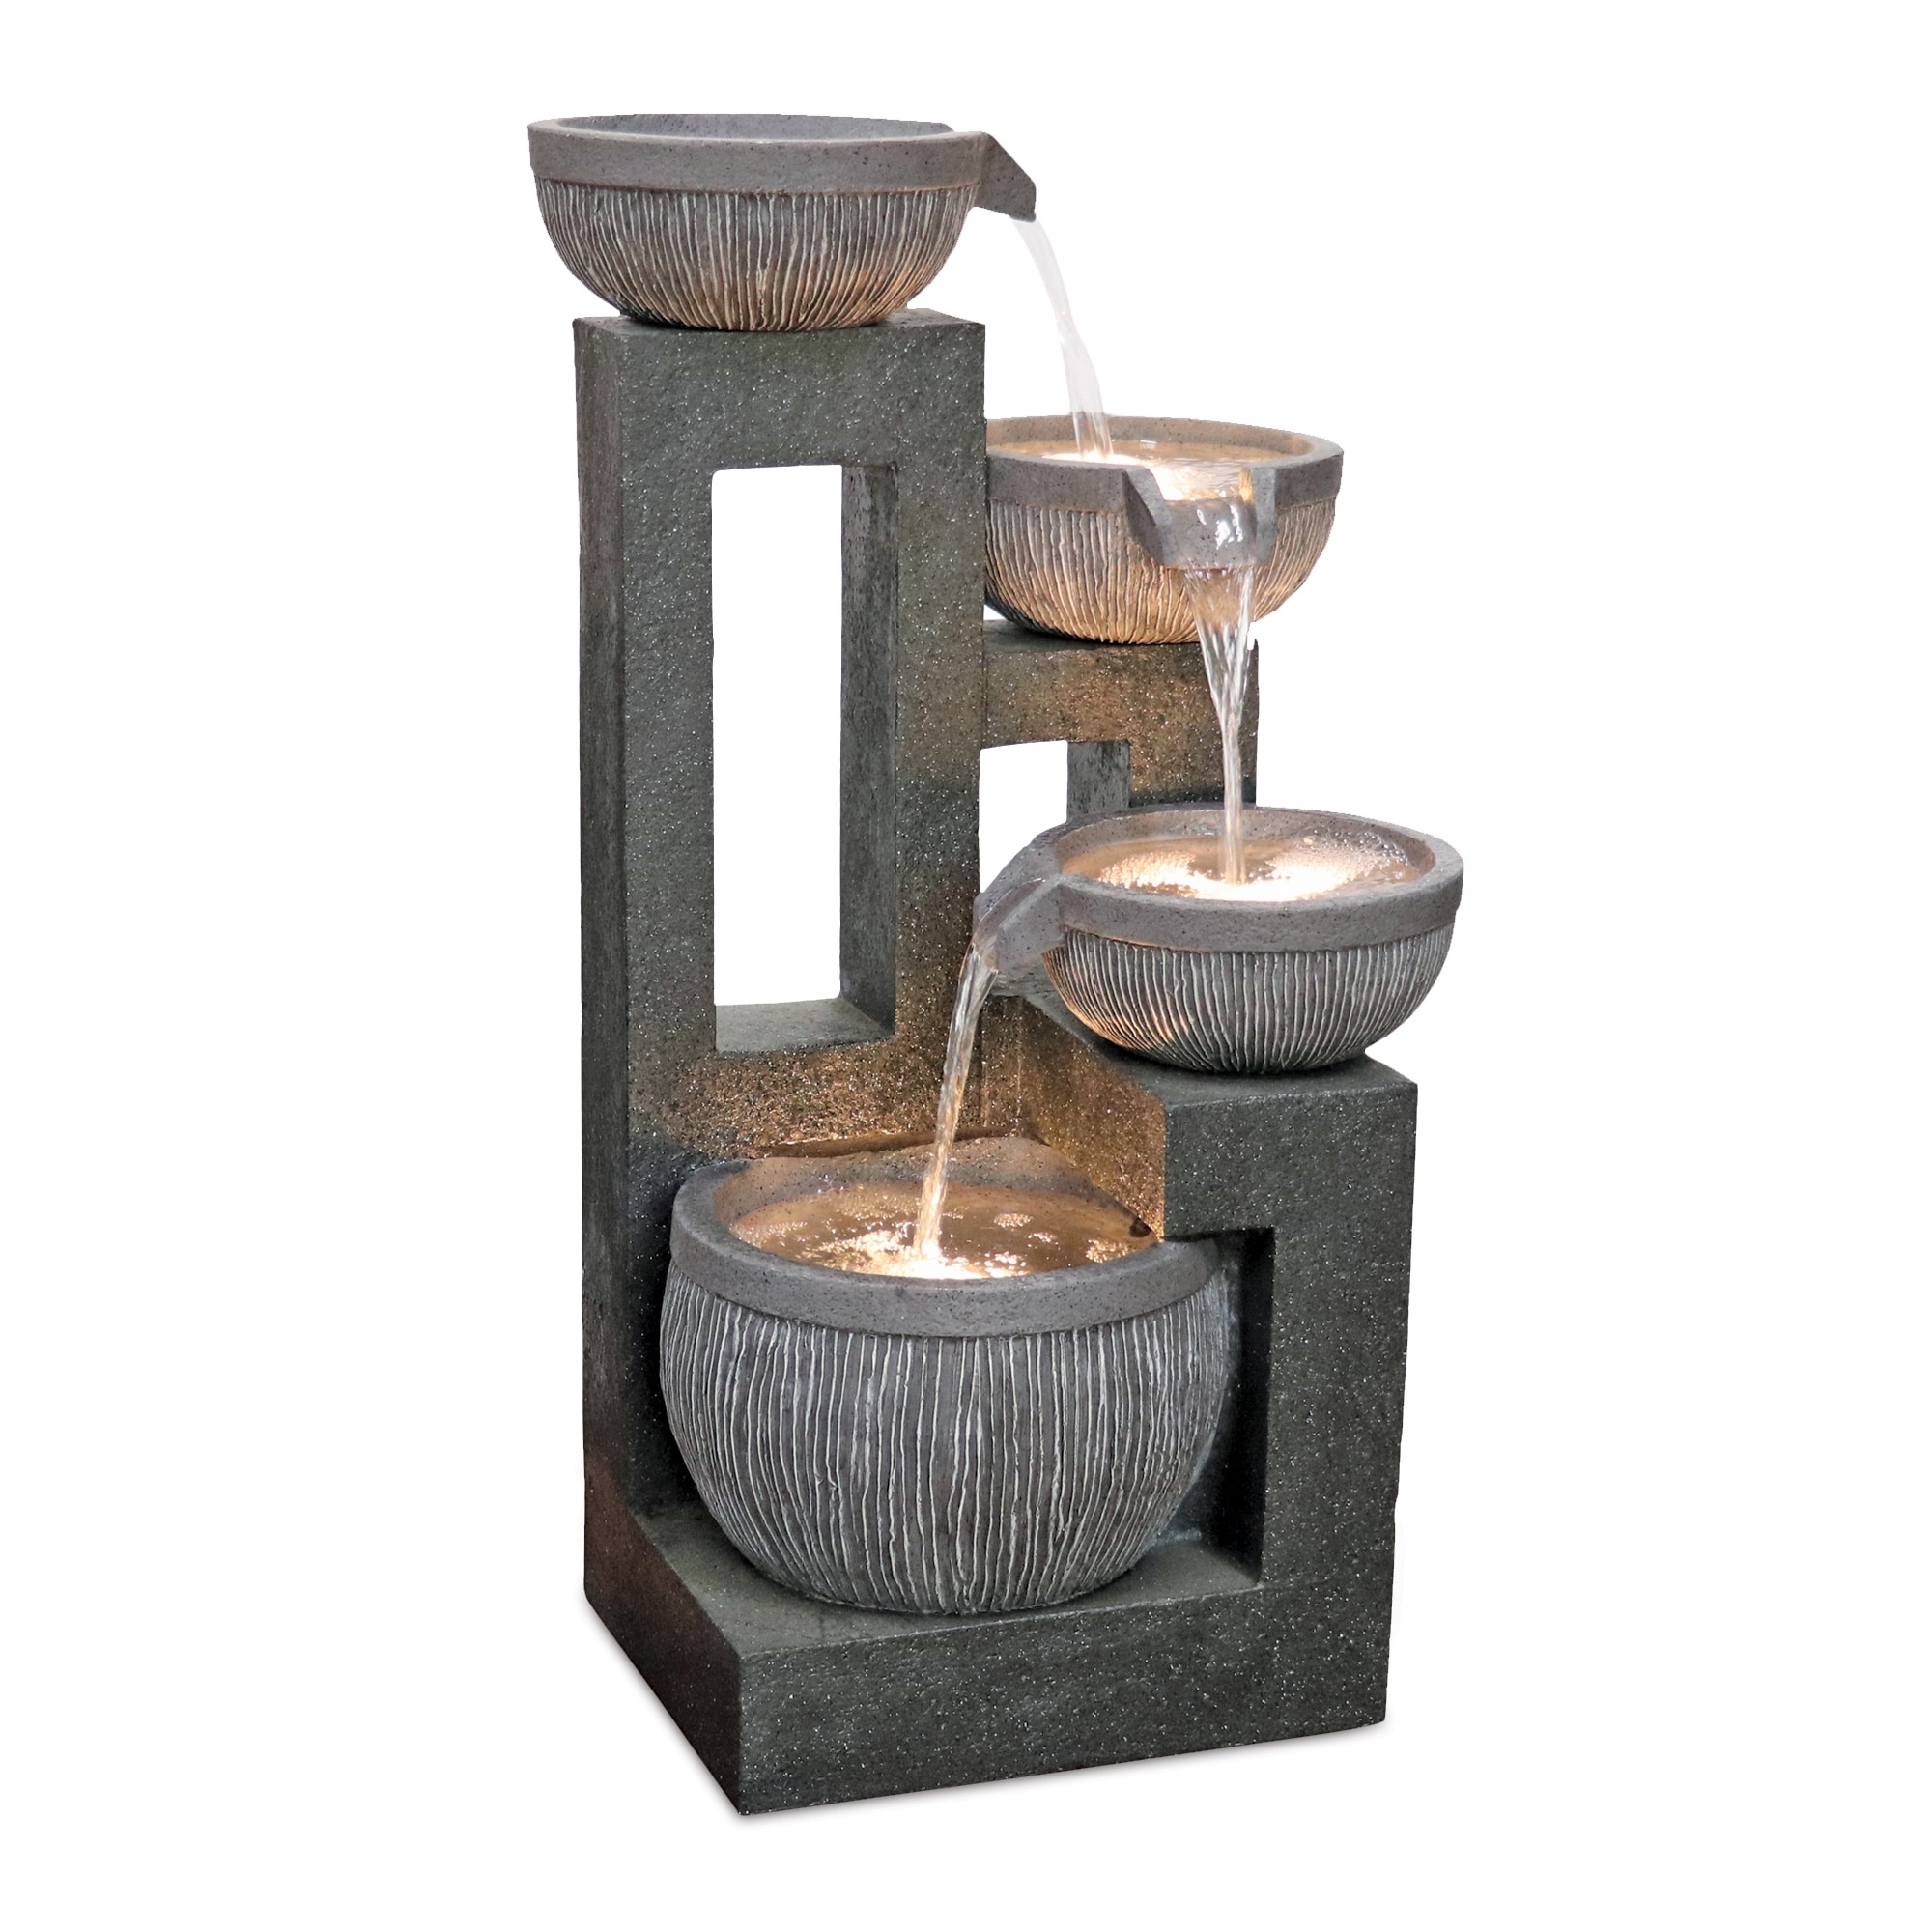 Stone Cascading Bowl Fountain 32.5"H - 17.5" x 17.5" x 32.5"